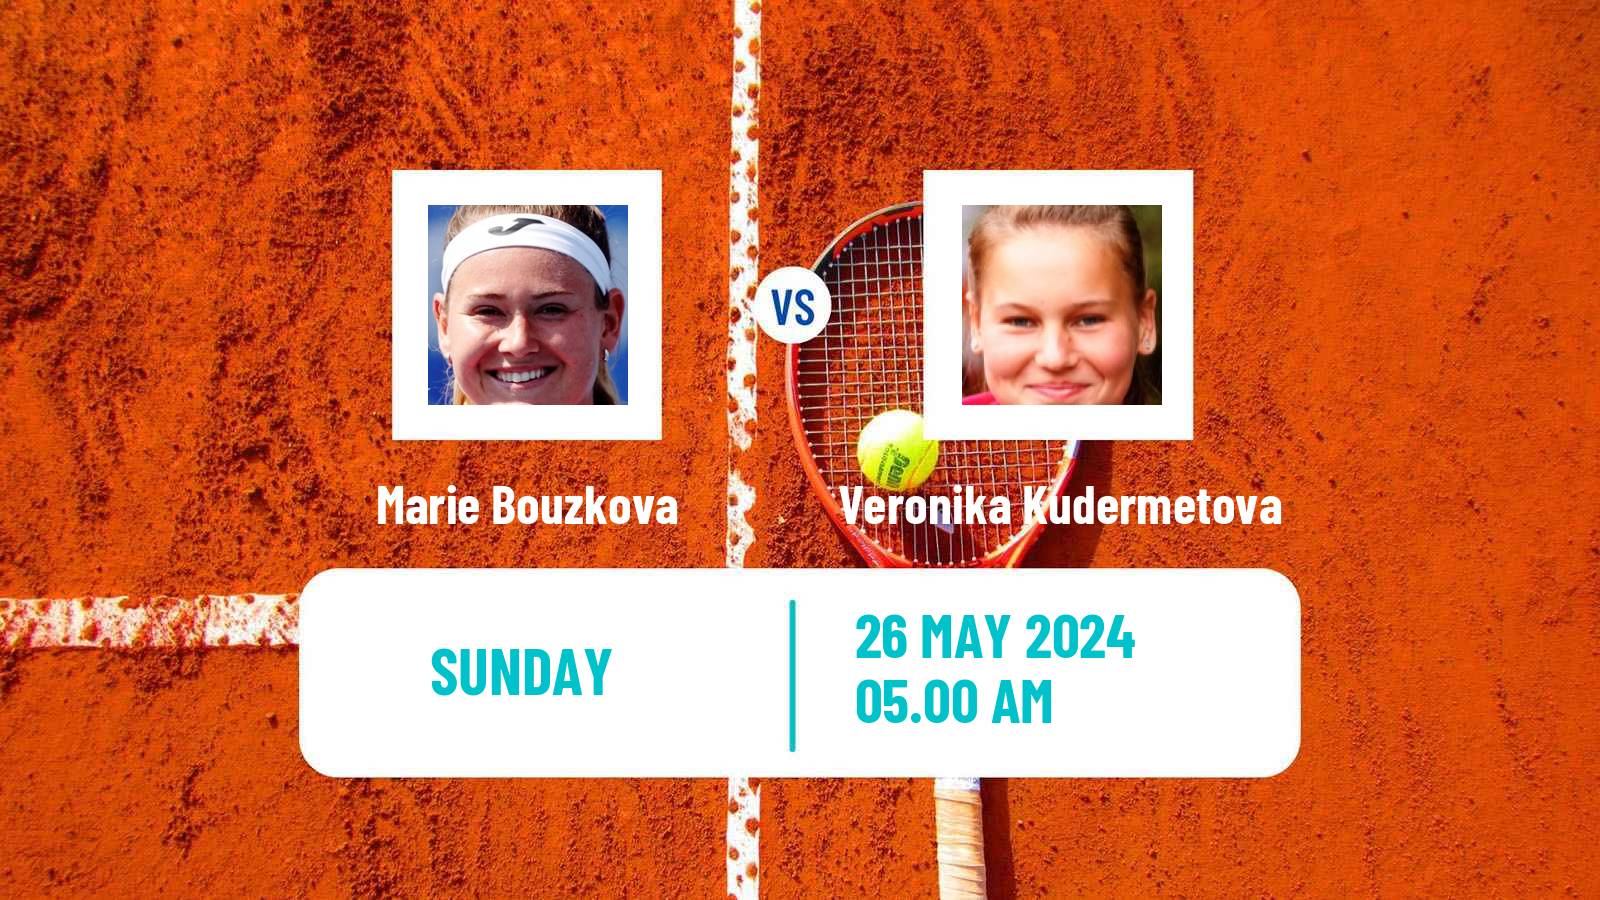 Tennis WTA Roland Garros Marie Bouzkova - Veronika Kudermetova